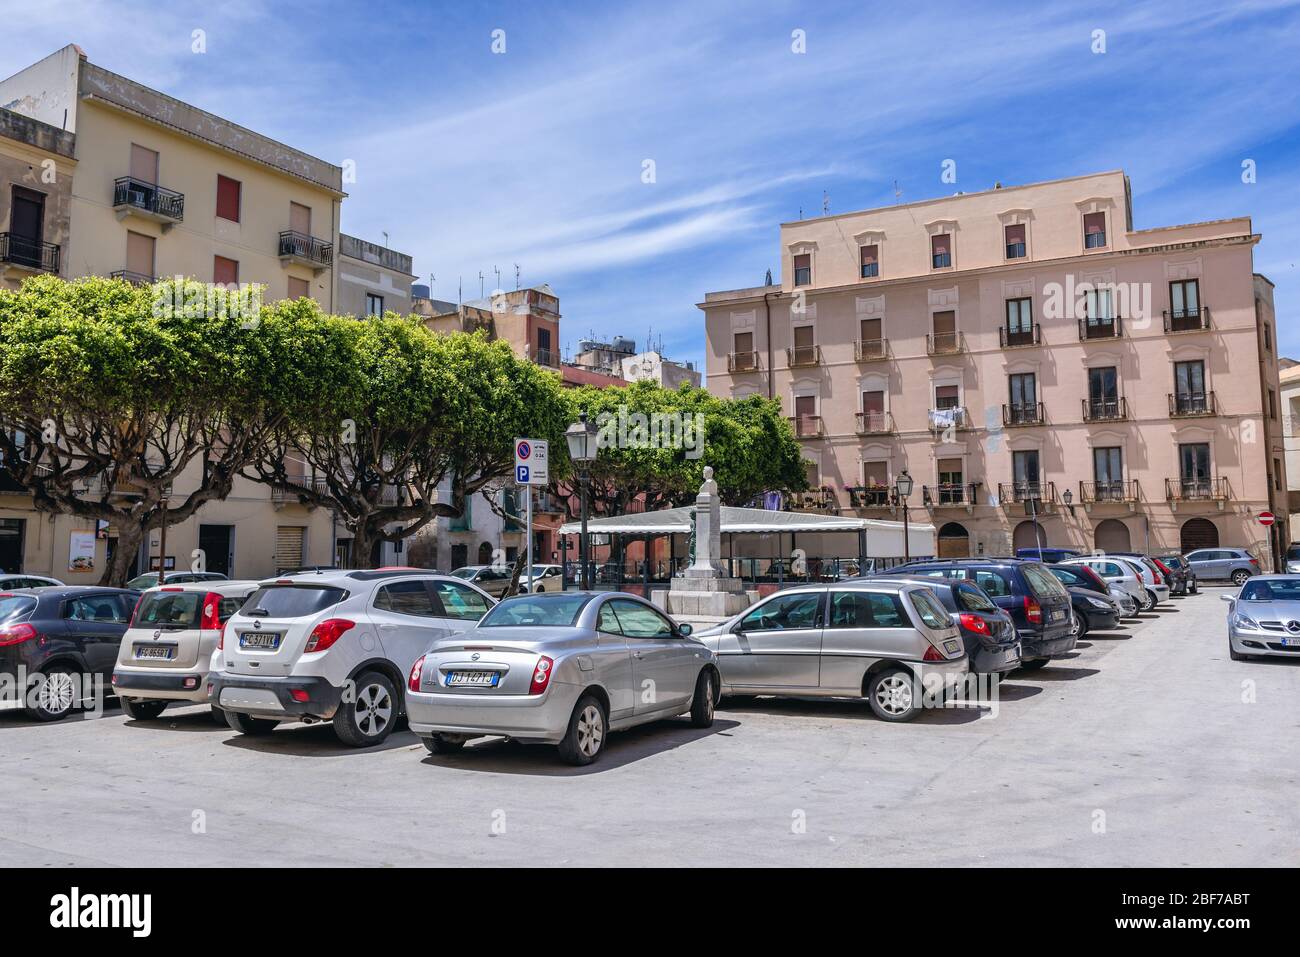 Piazza Principessa Jolanda - small square in historic part of Trapani city on the west coast of Sicily in Italy Stock Photo